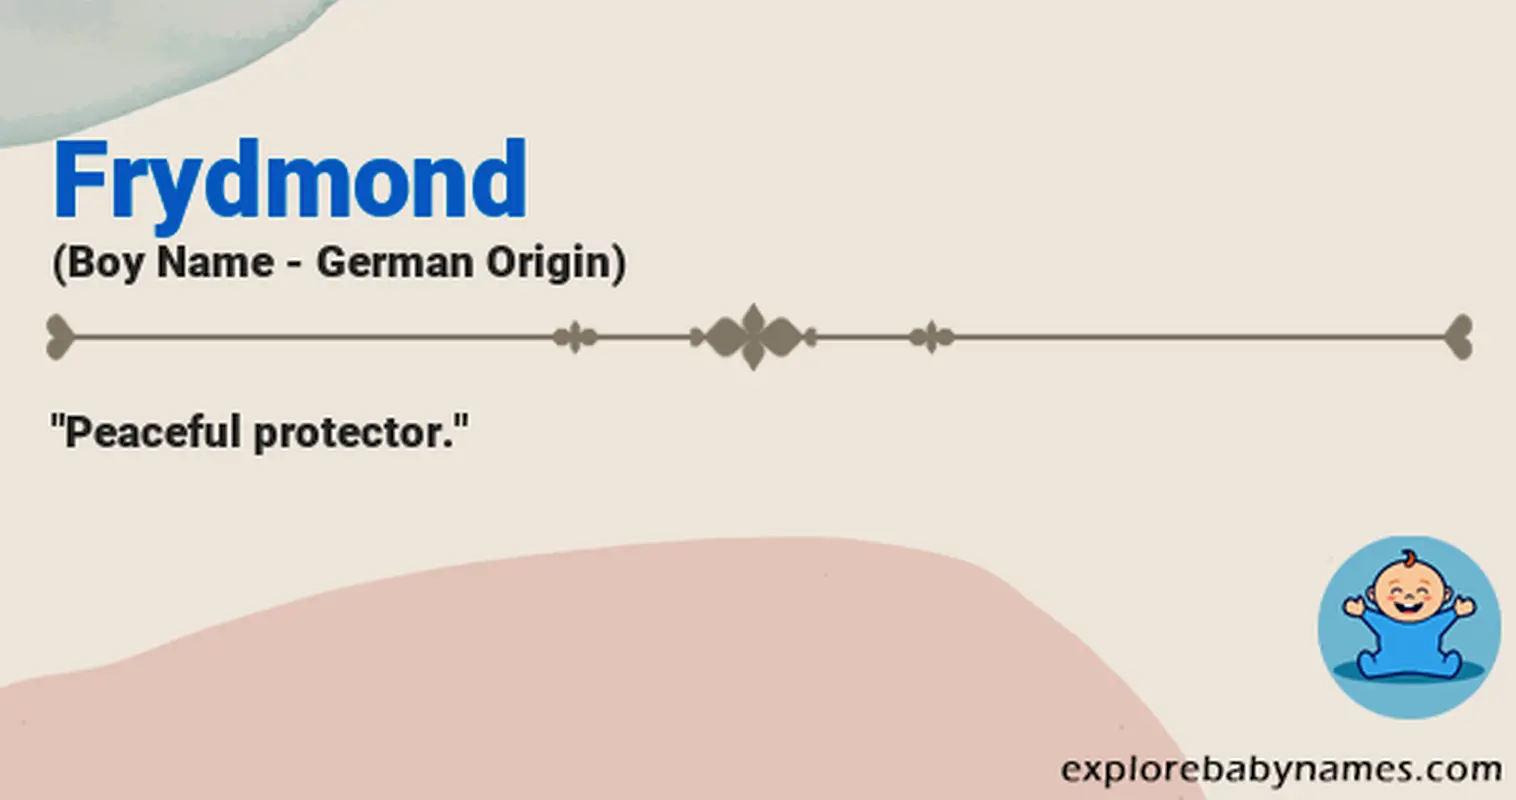 Meaning of Frydmond